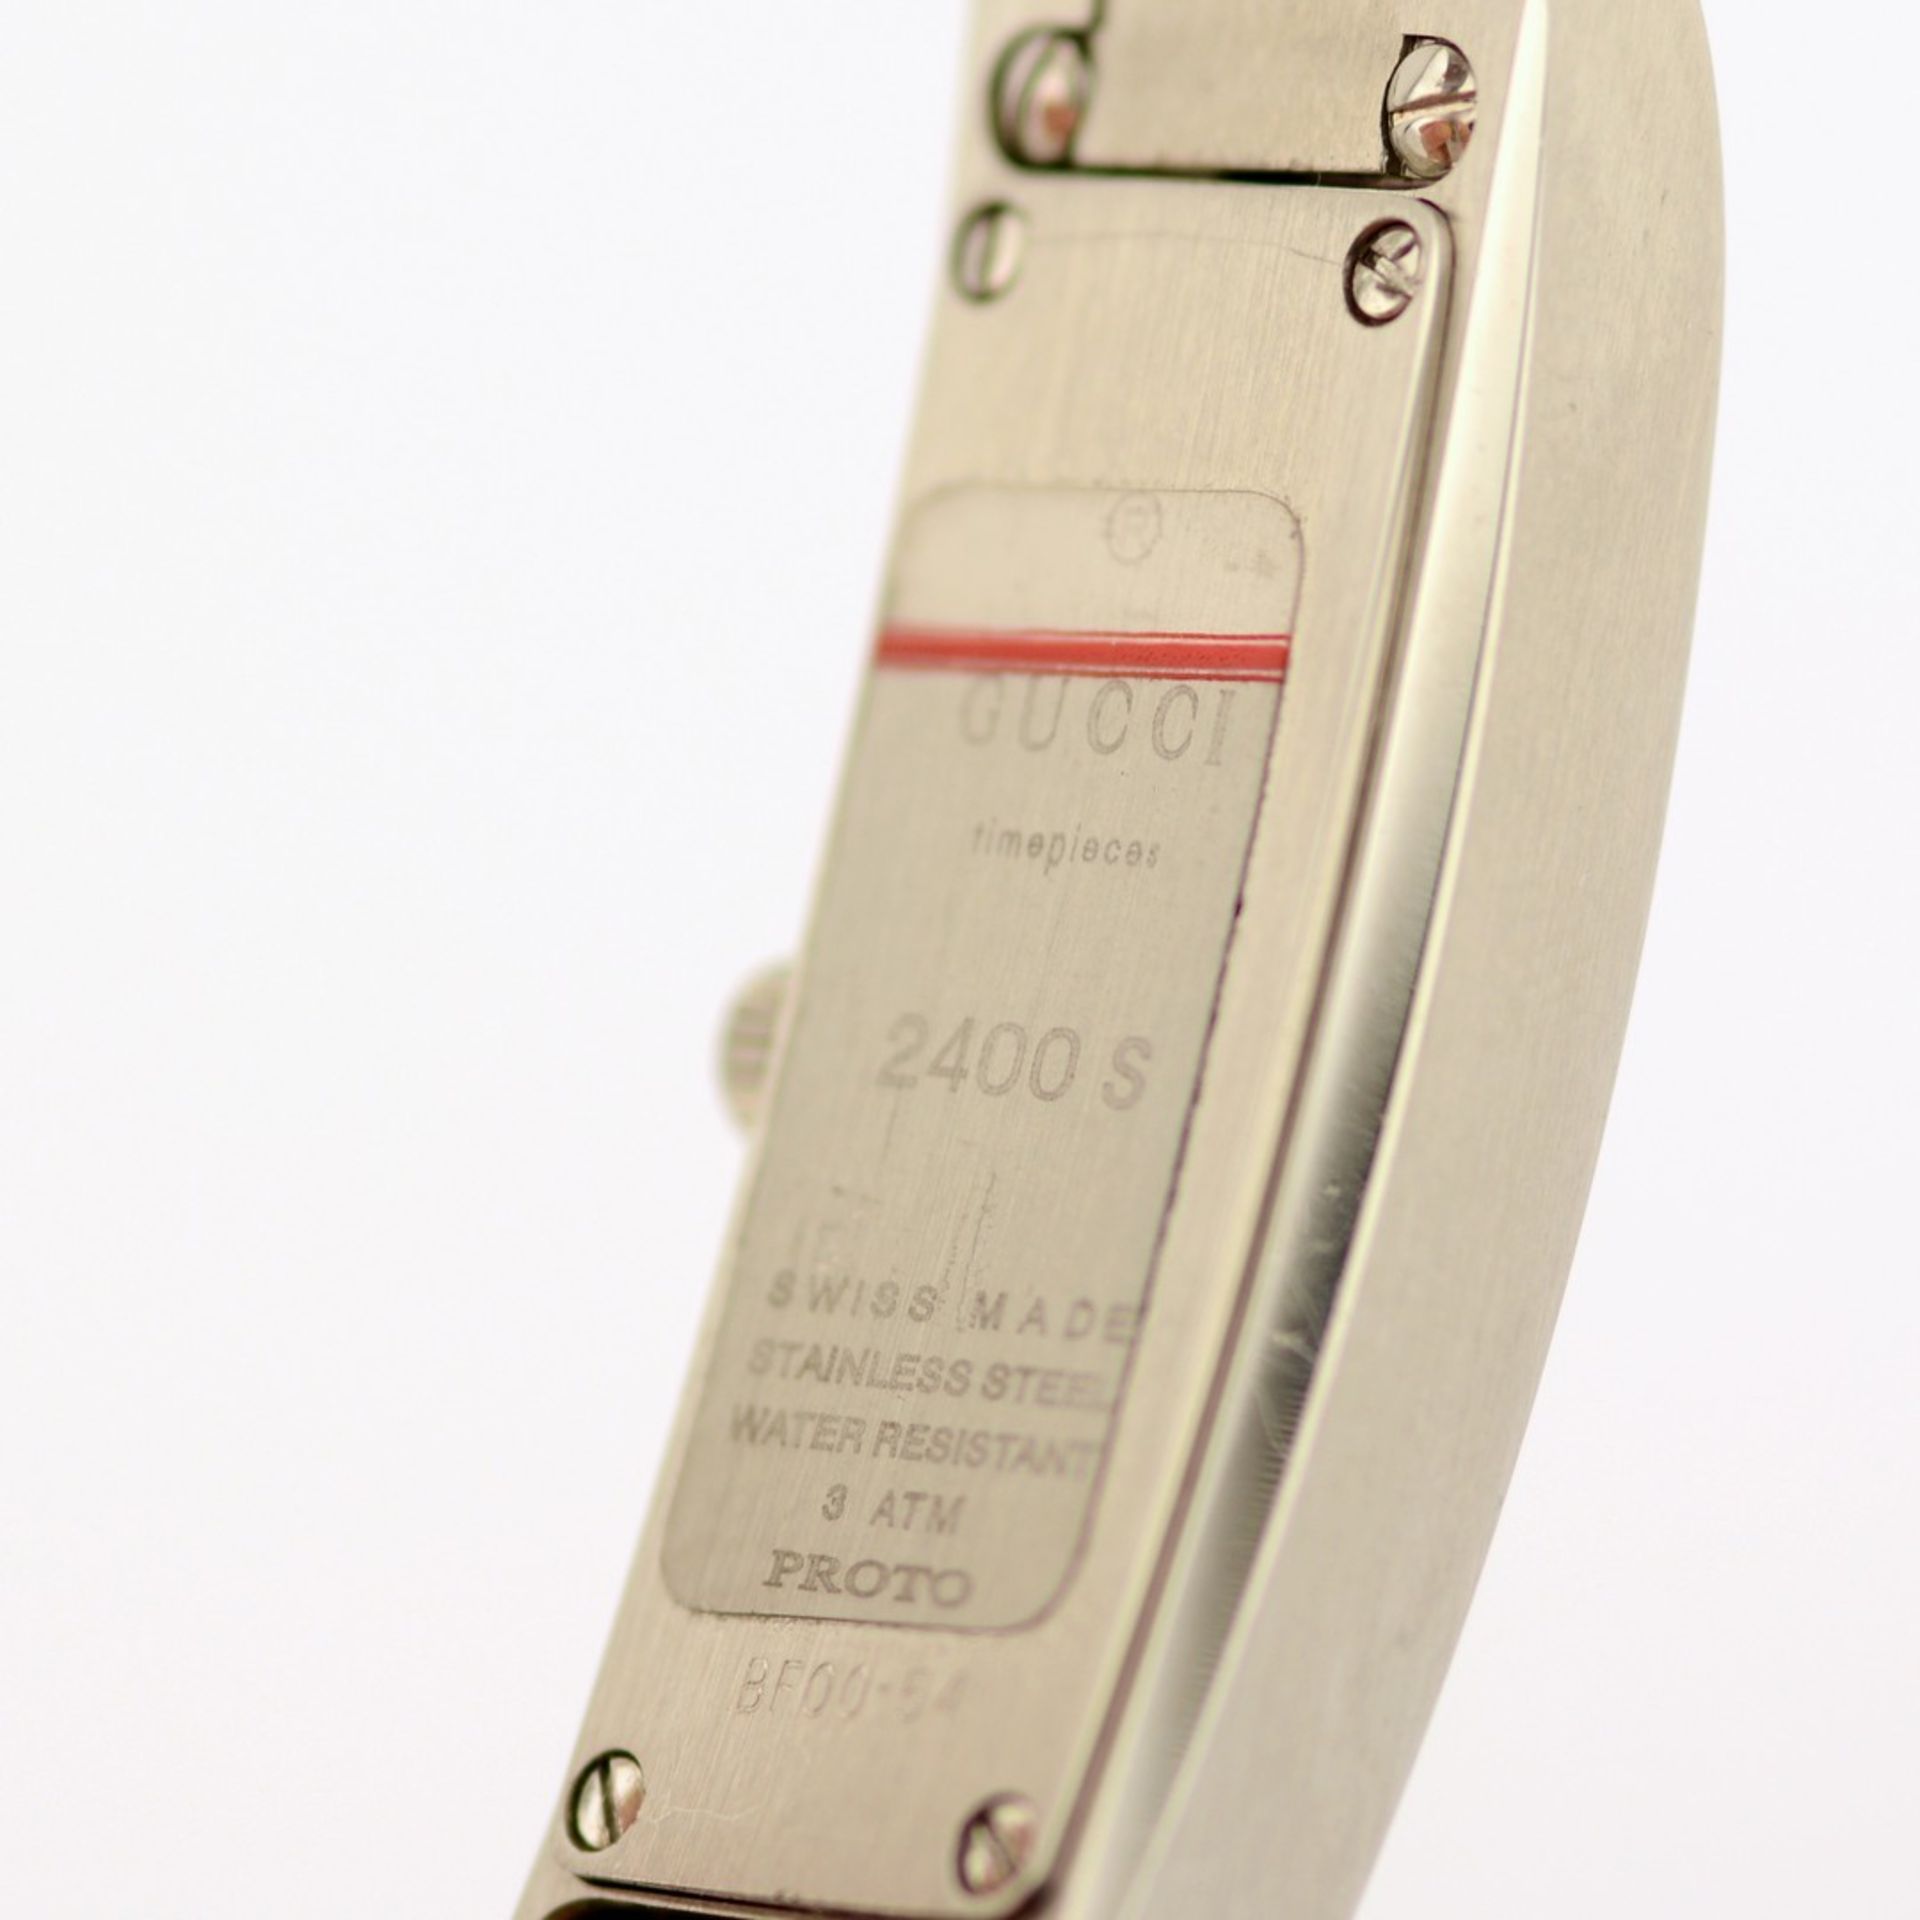 Gucci / 2400S - (Unworn) Lady's Steel Wrist Watch - Image 7 of 7